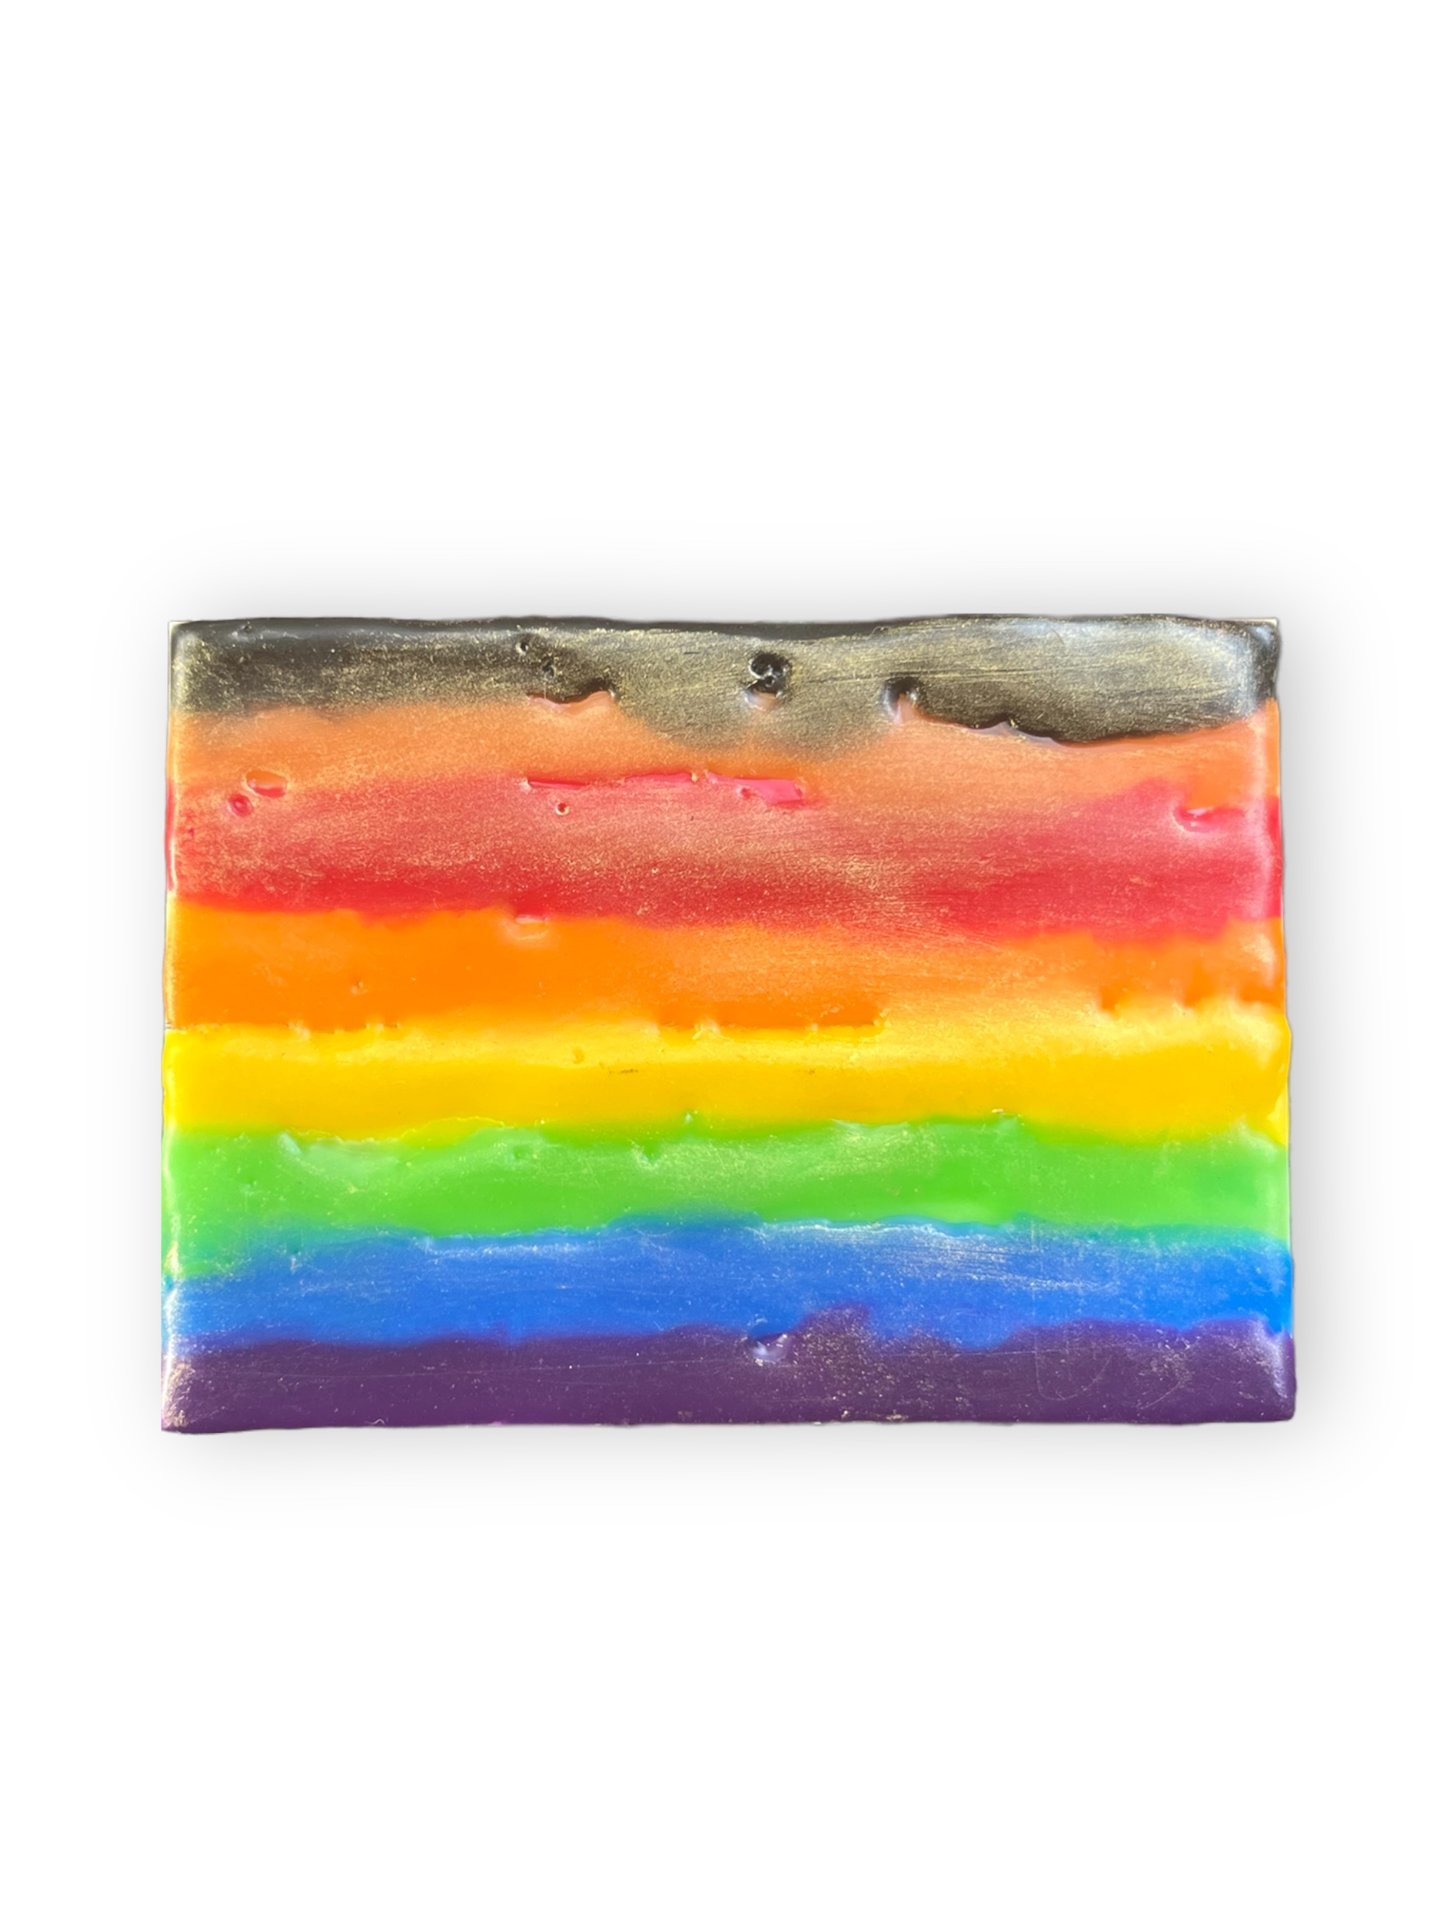 Rainbow Pride Magnet